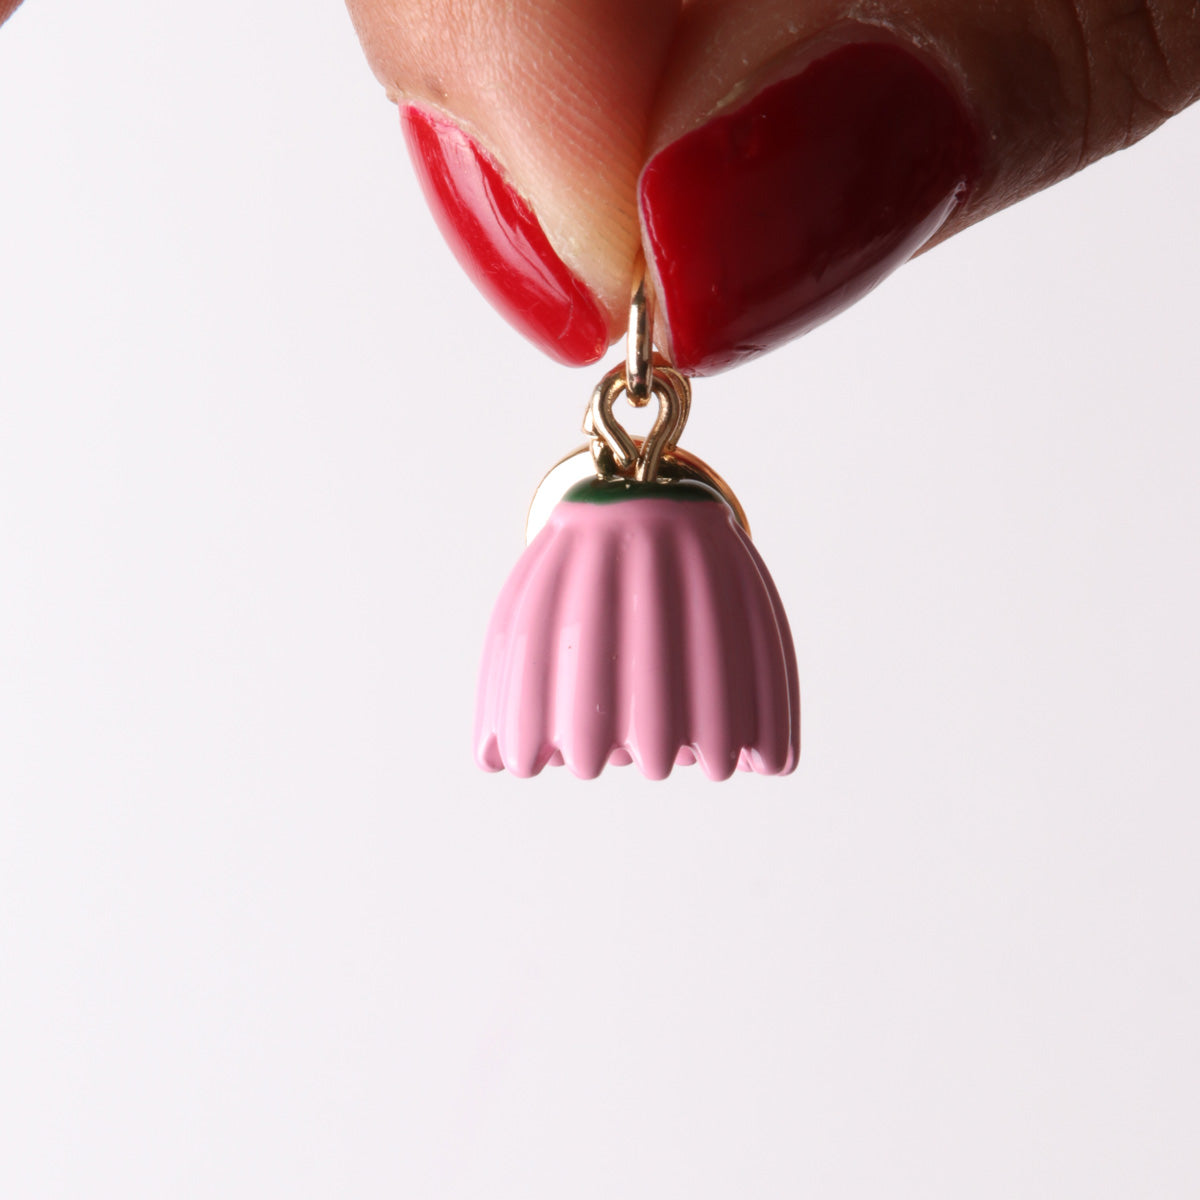 Metal pendant bell -shaped bell -shaped bell -shaped large -sized flower embellished with colored glazes